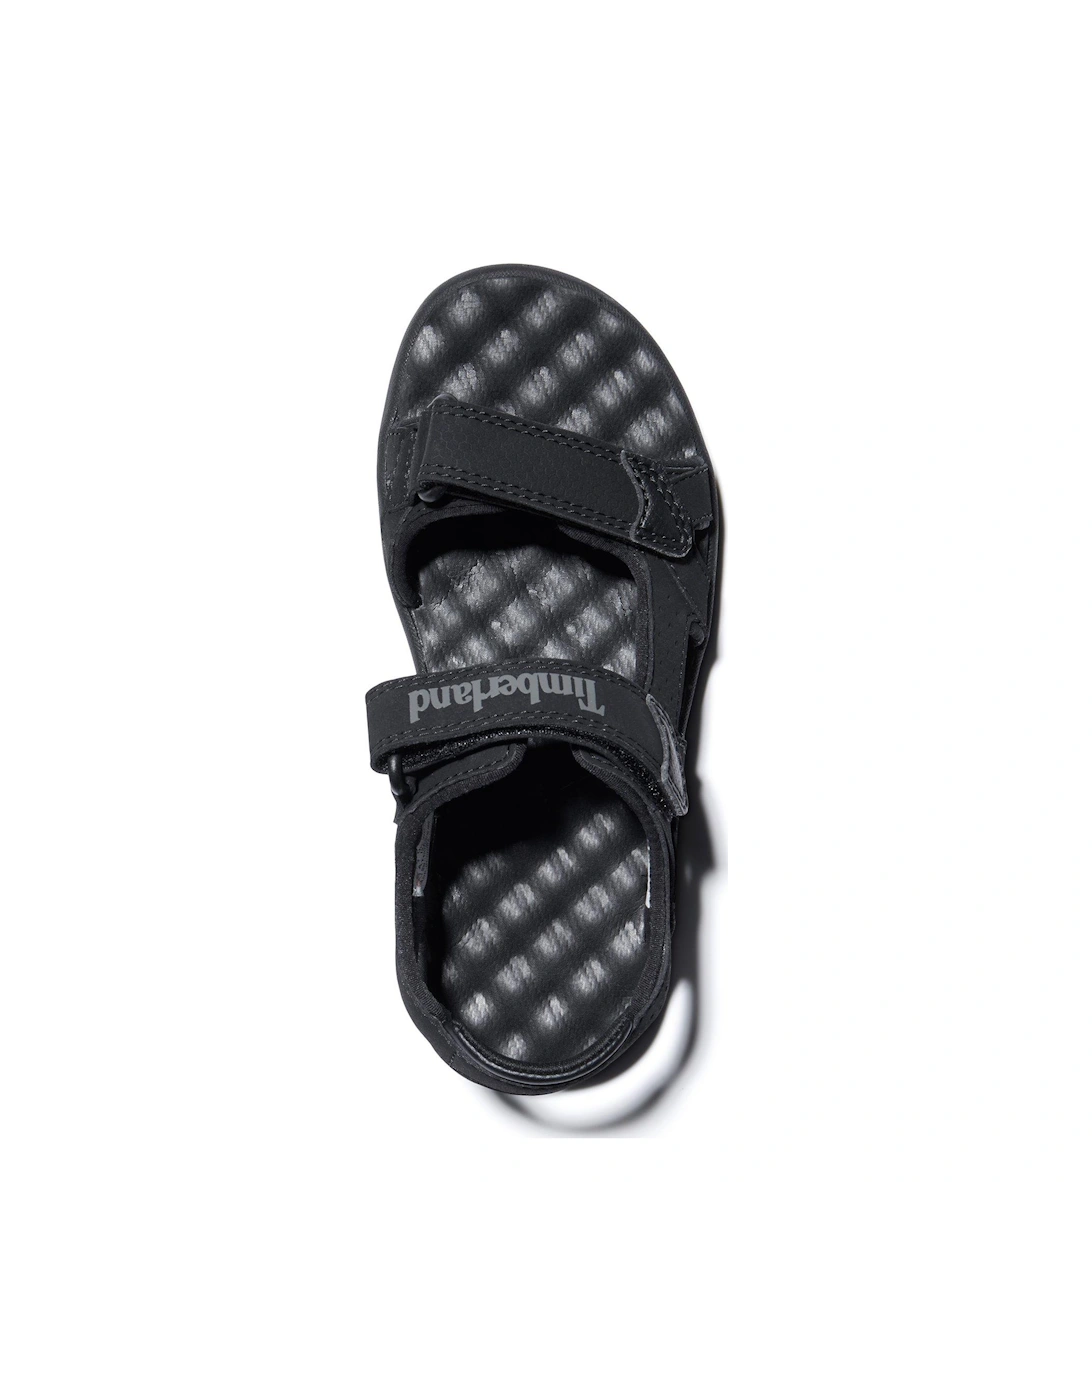 Perkins Row 2-strap Sandal